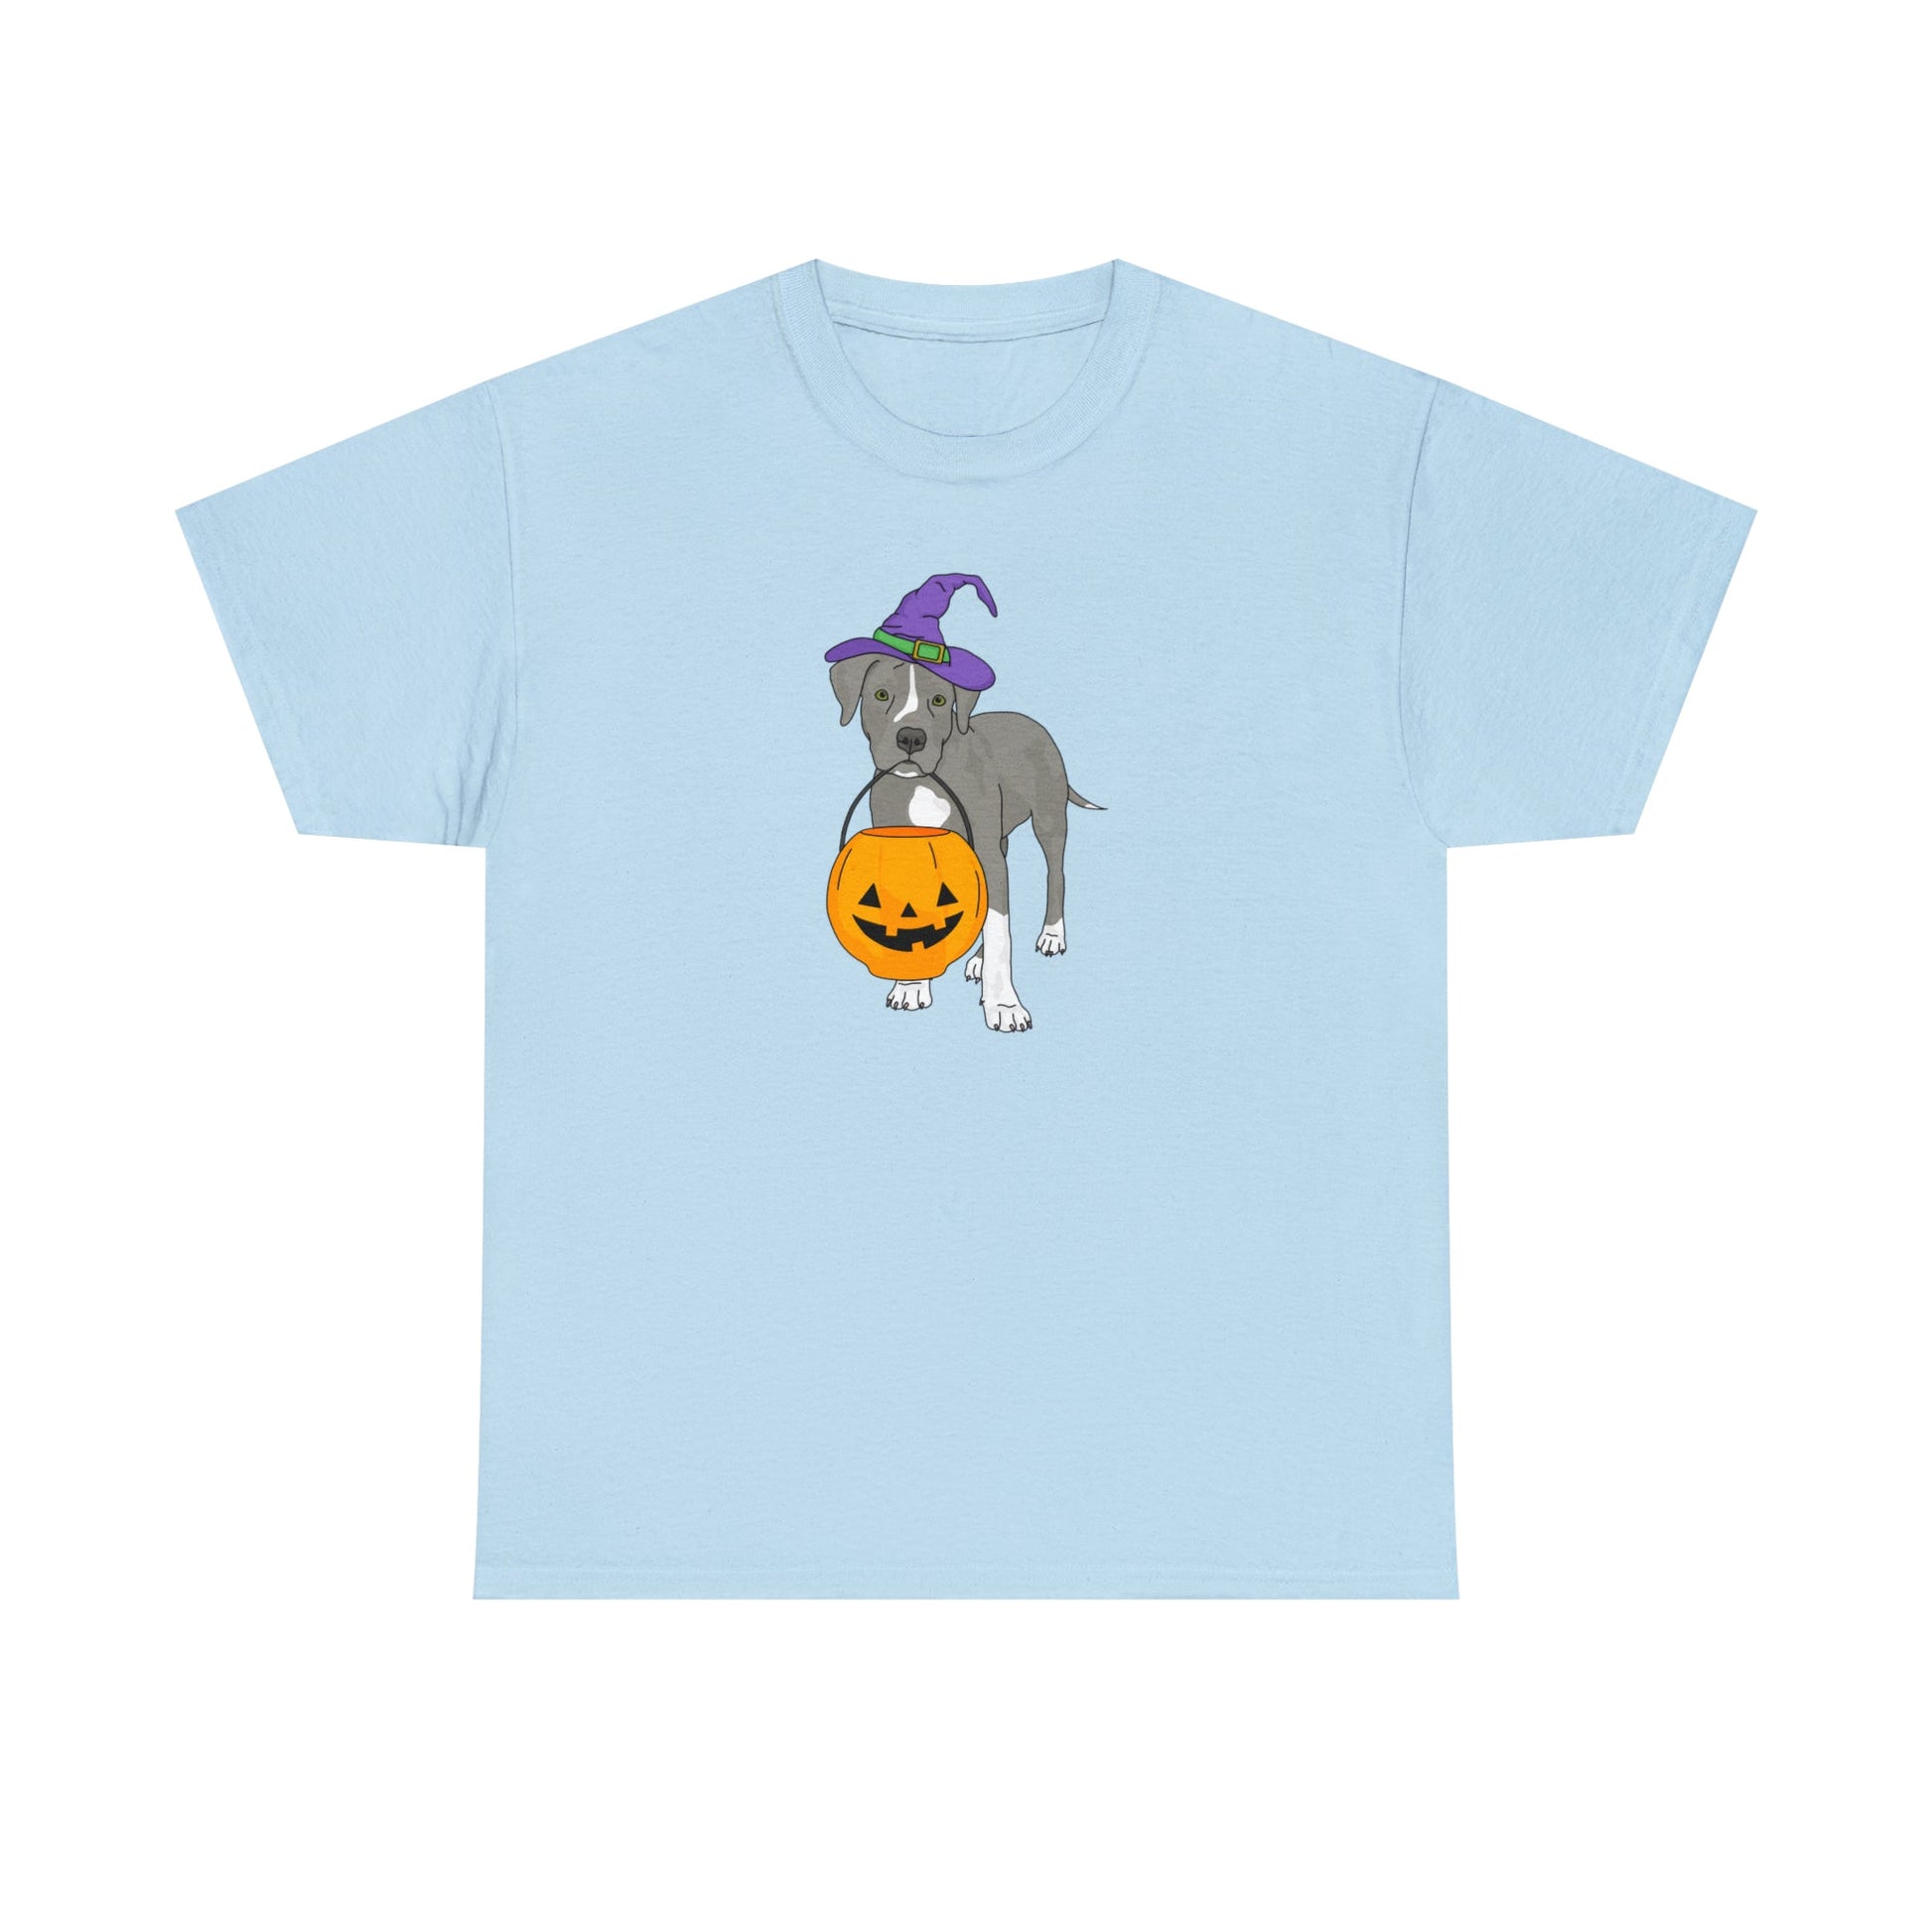 Witchy Puppy | T-shirt - Detezi Designs-68504001295346676355